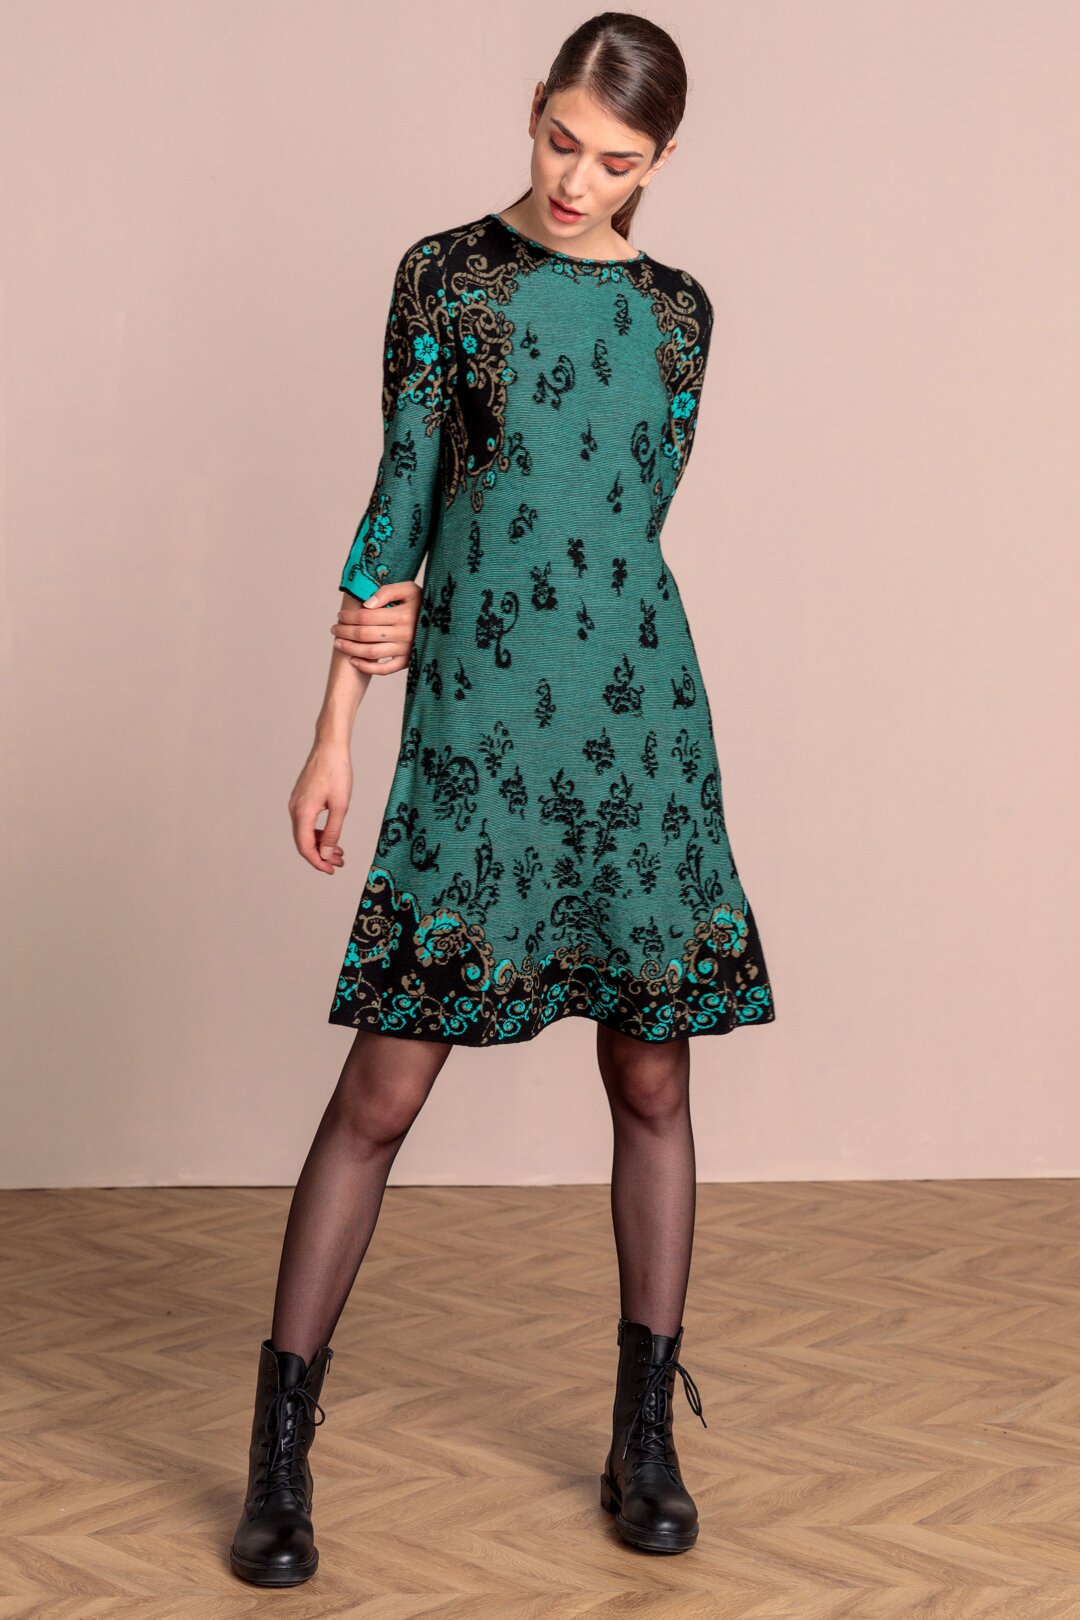 Dress, Brocade Pattern